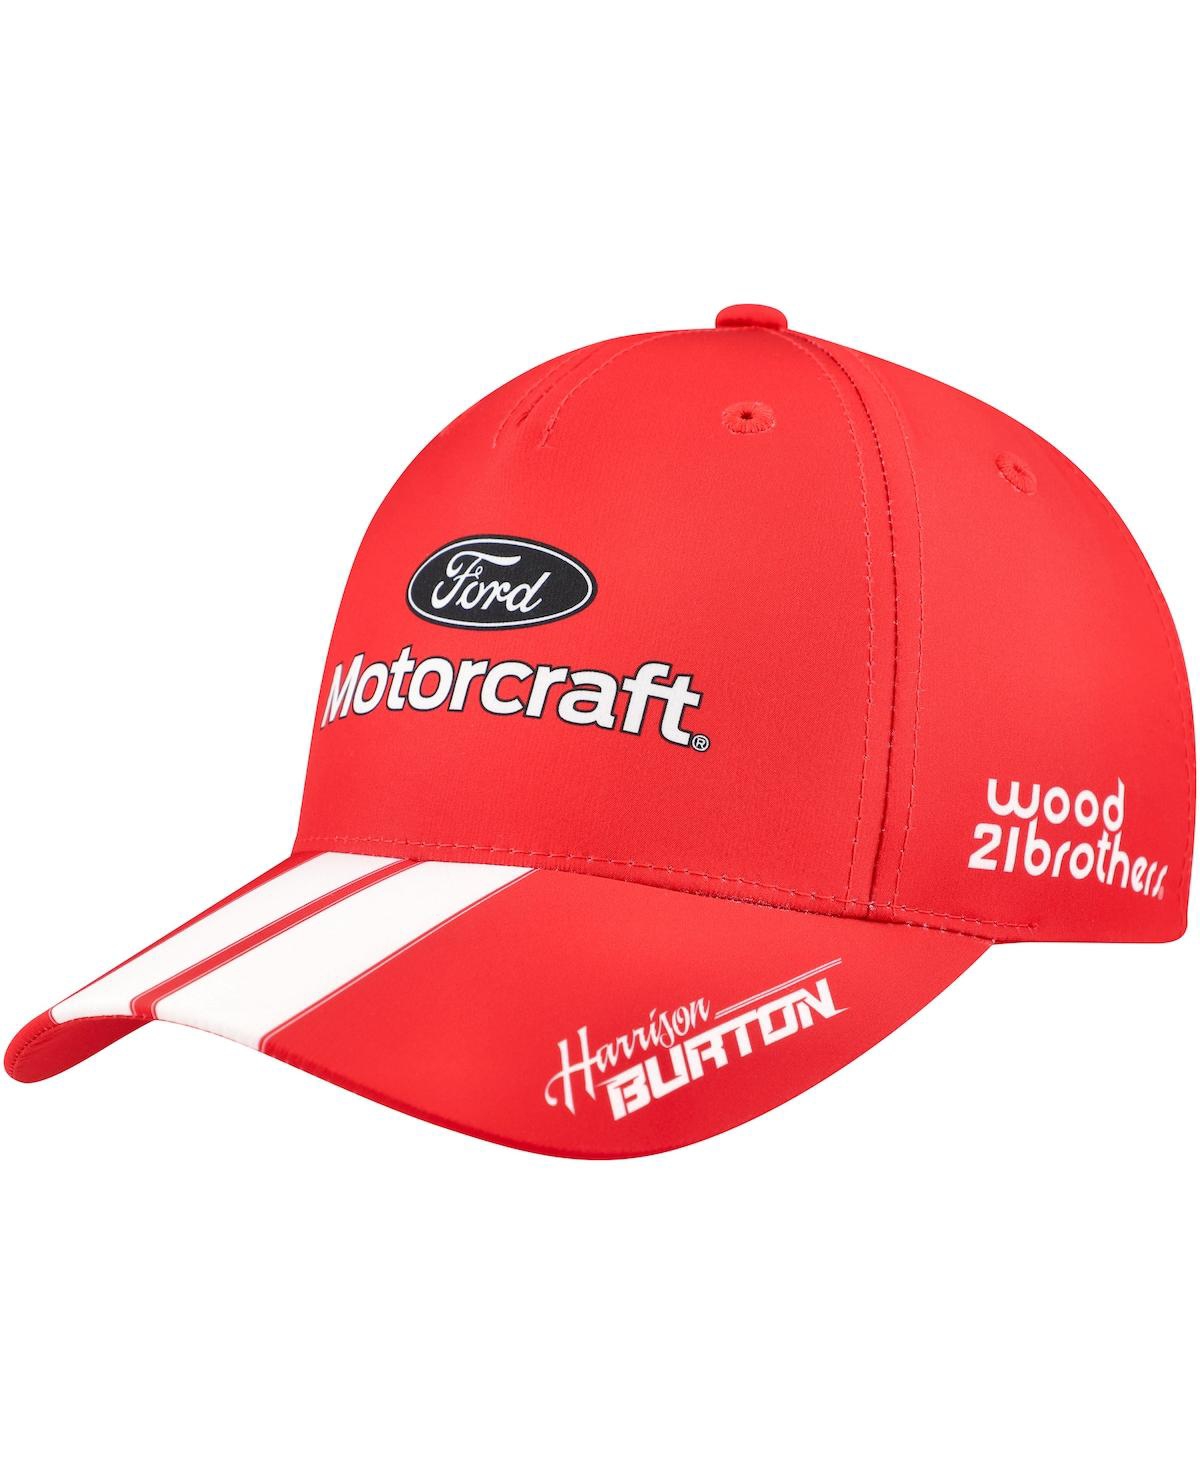 Men's Red Harrison Burton Ford Motorcraft Uniform Adjustable Hat - Red